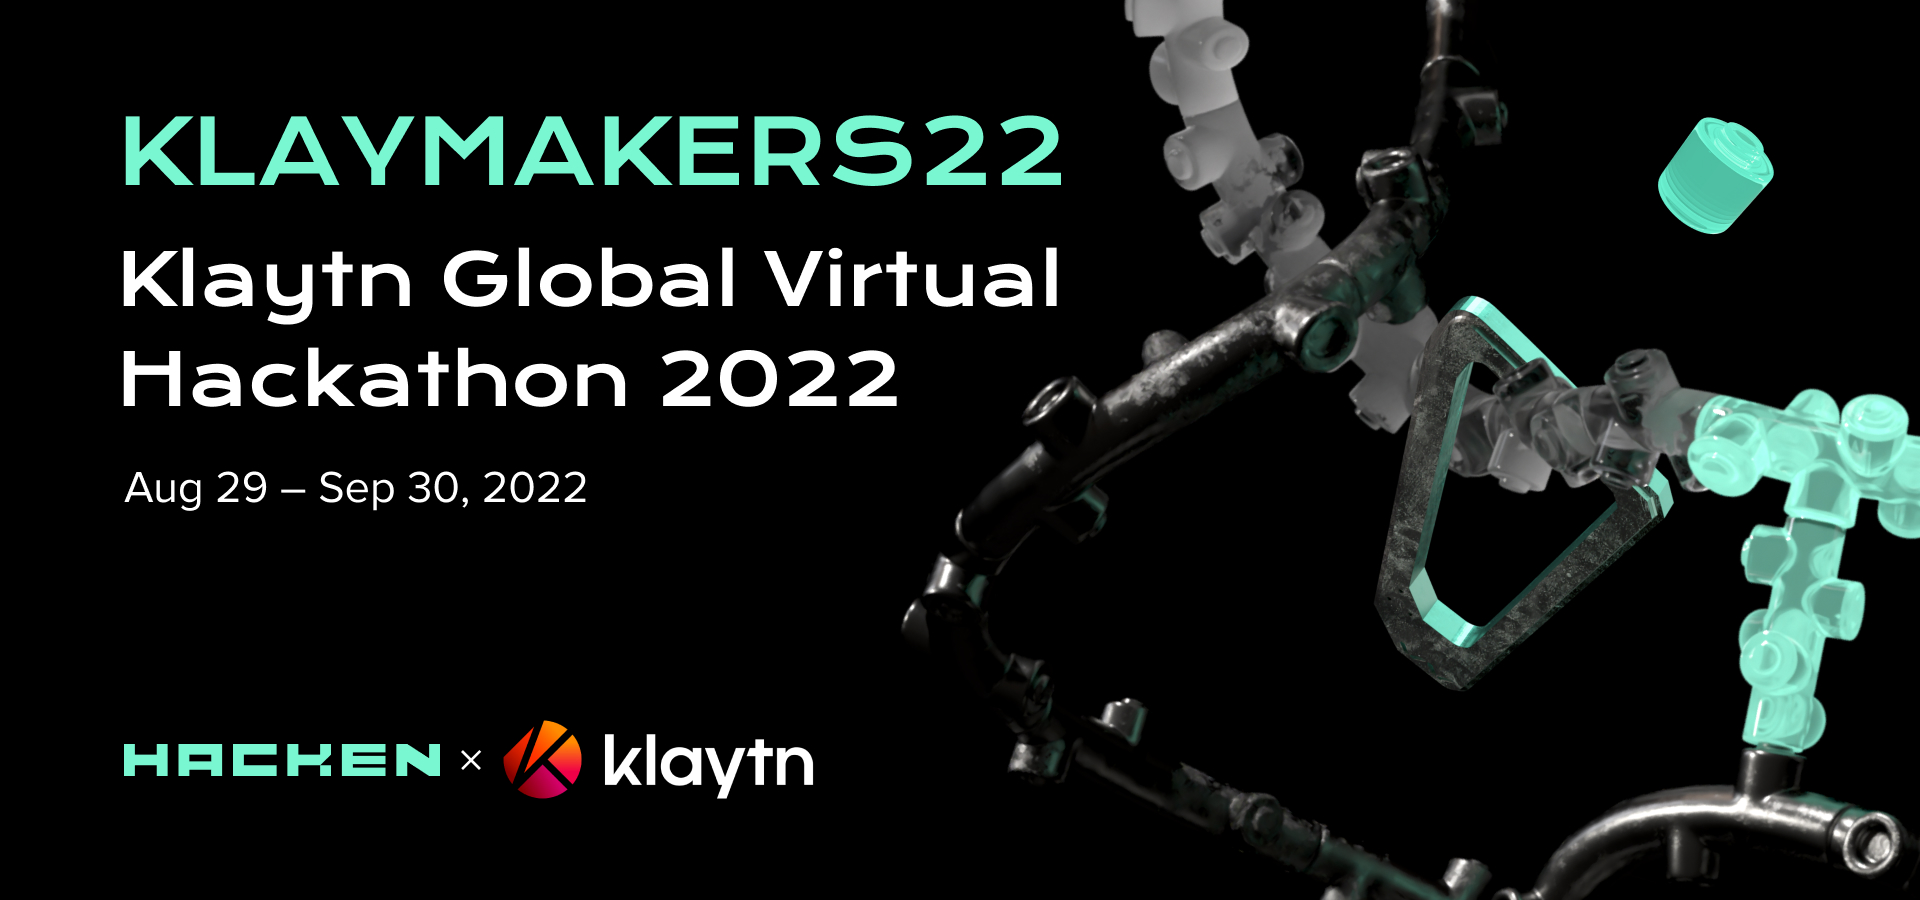 Hacken becomes KlayMakers22 Community Partner at KlayMakers22